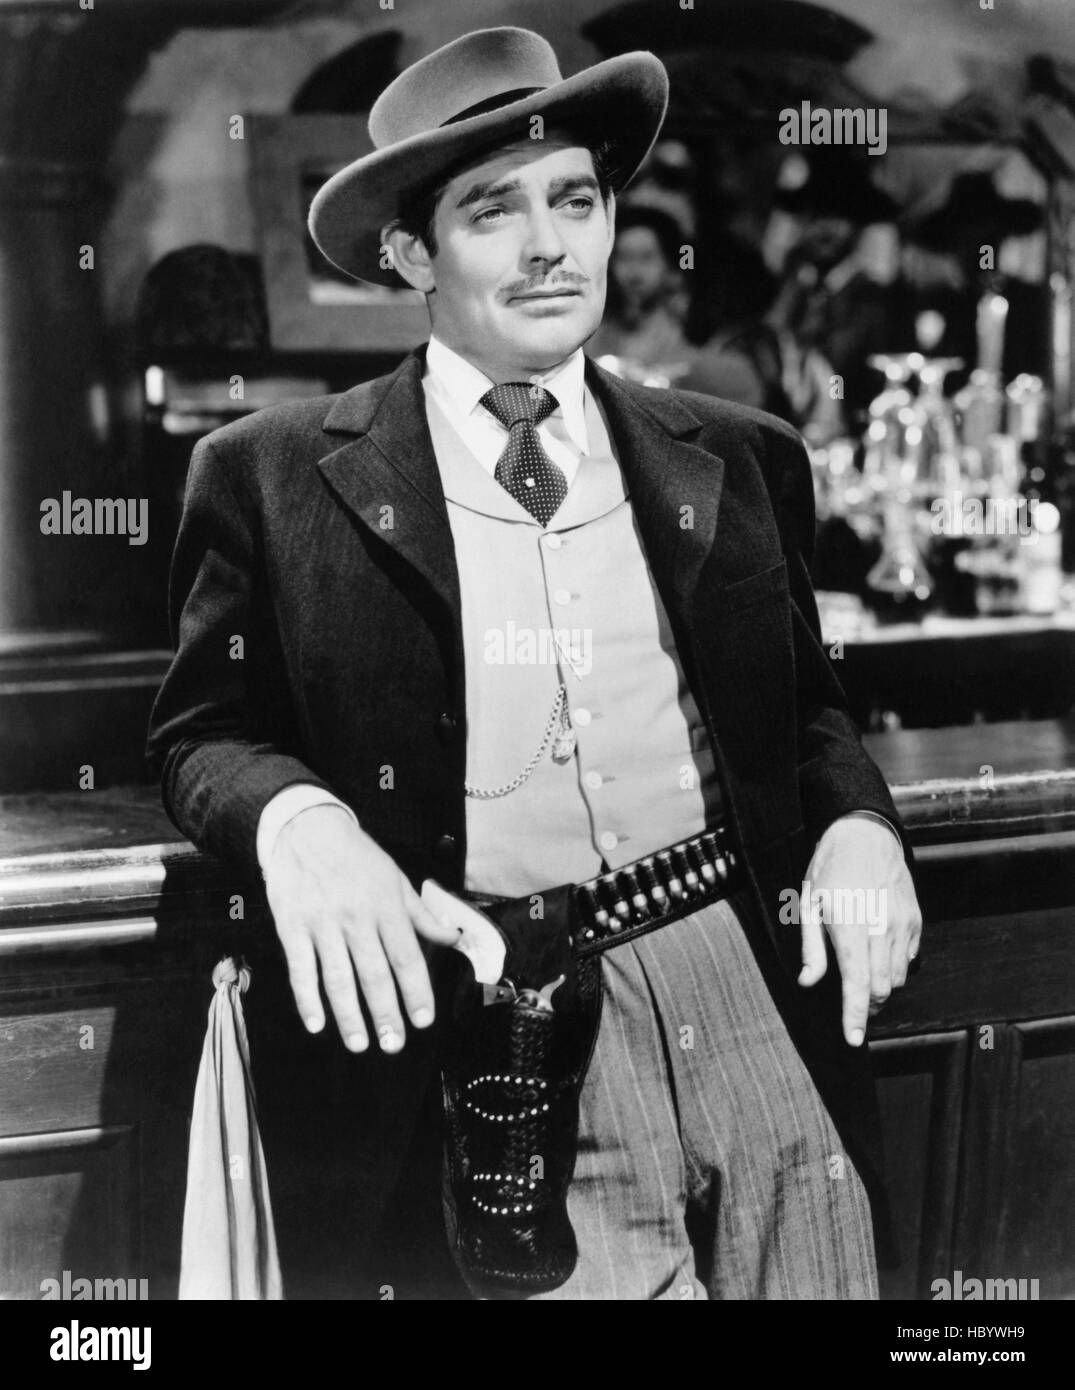 HONKY TONK, Clark Gable, 1941 Stock Photo - Alamy